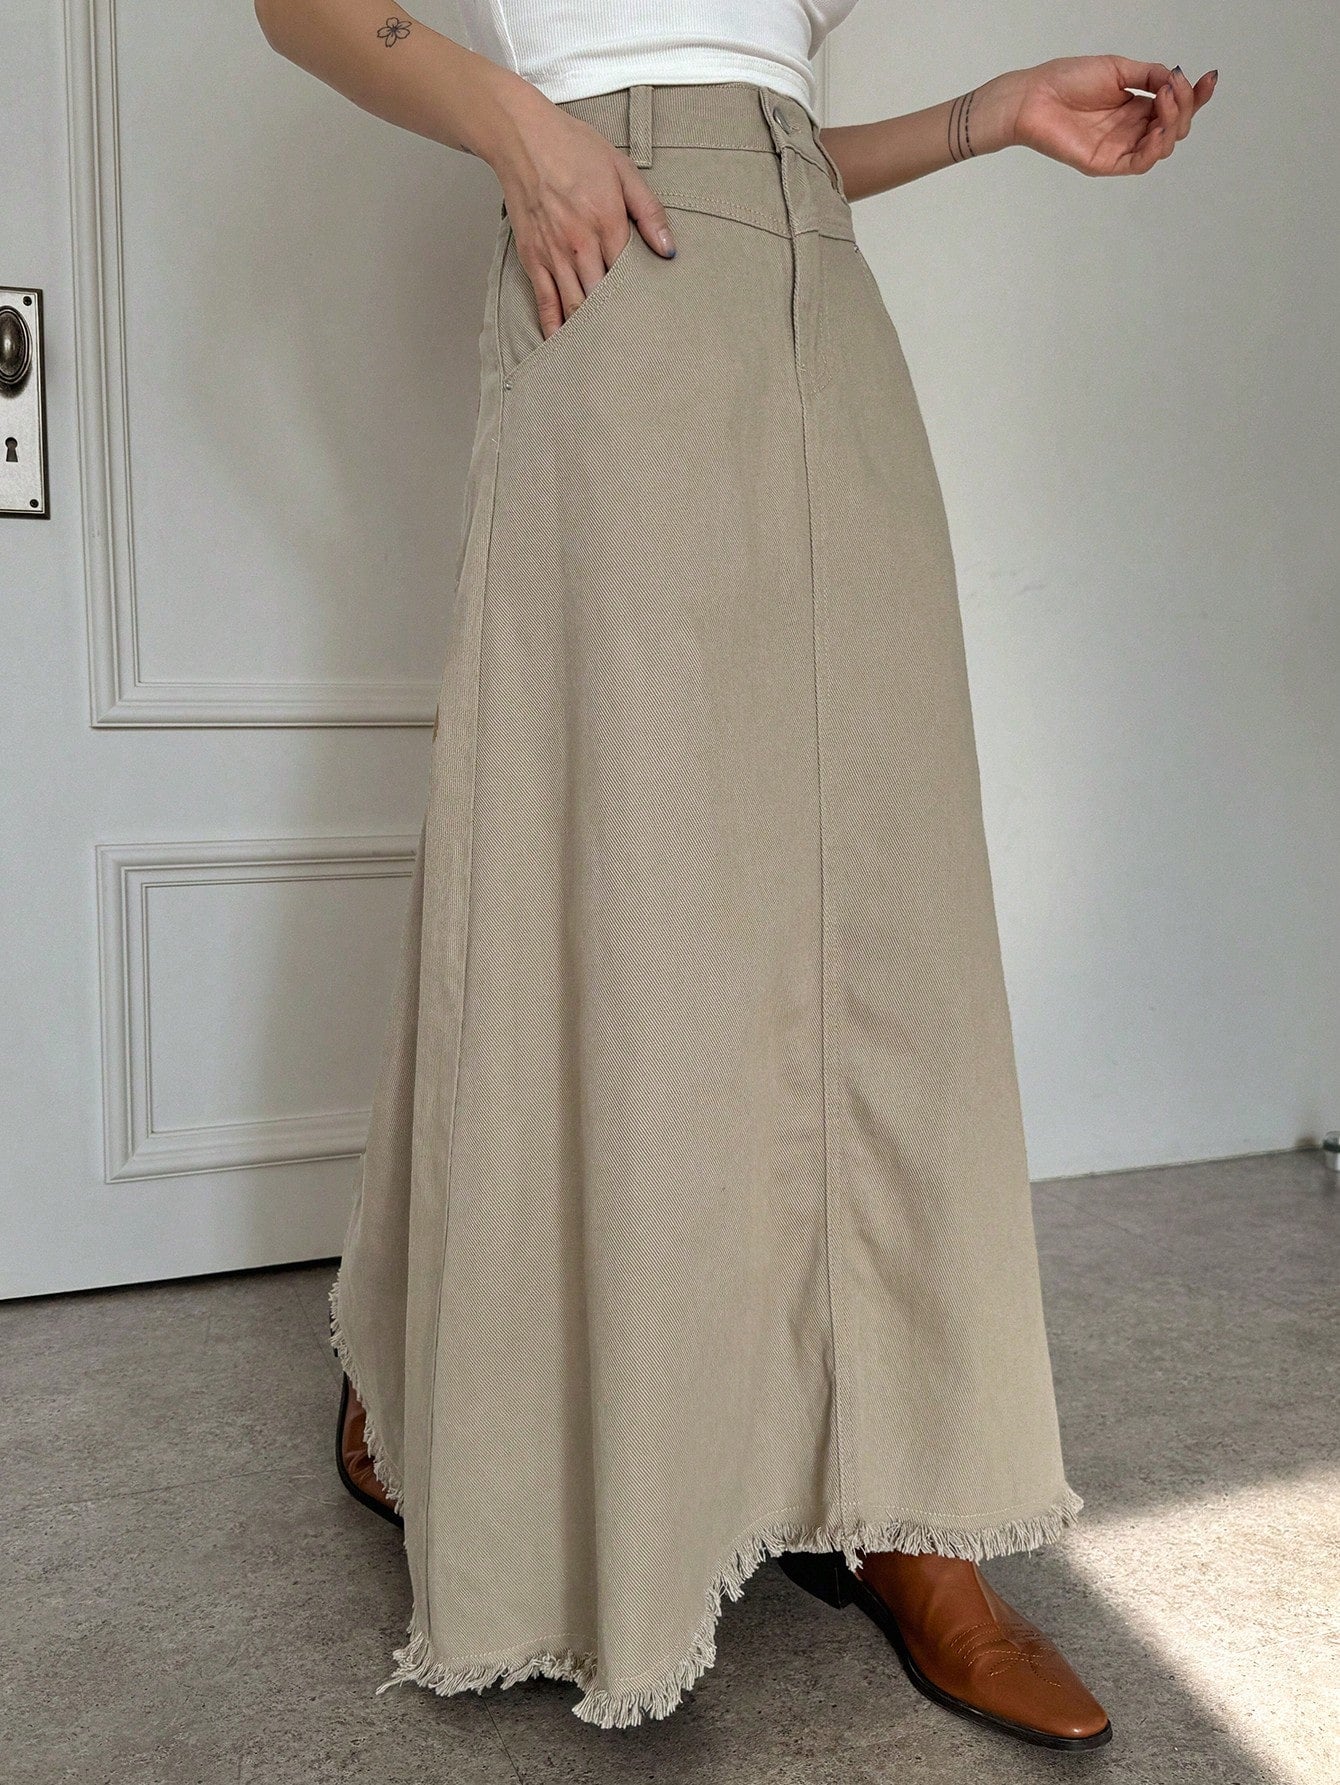 Women Long Denim Skirt For Summer Daily Wear